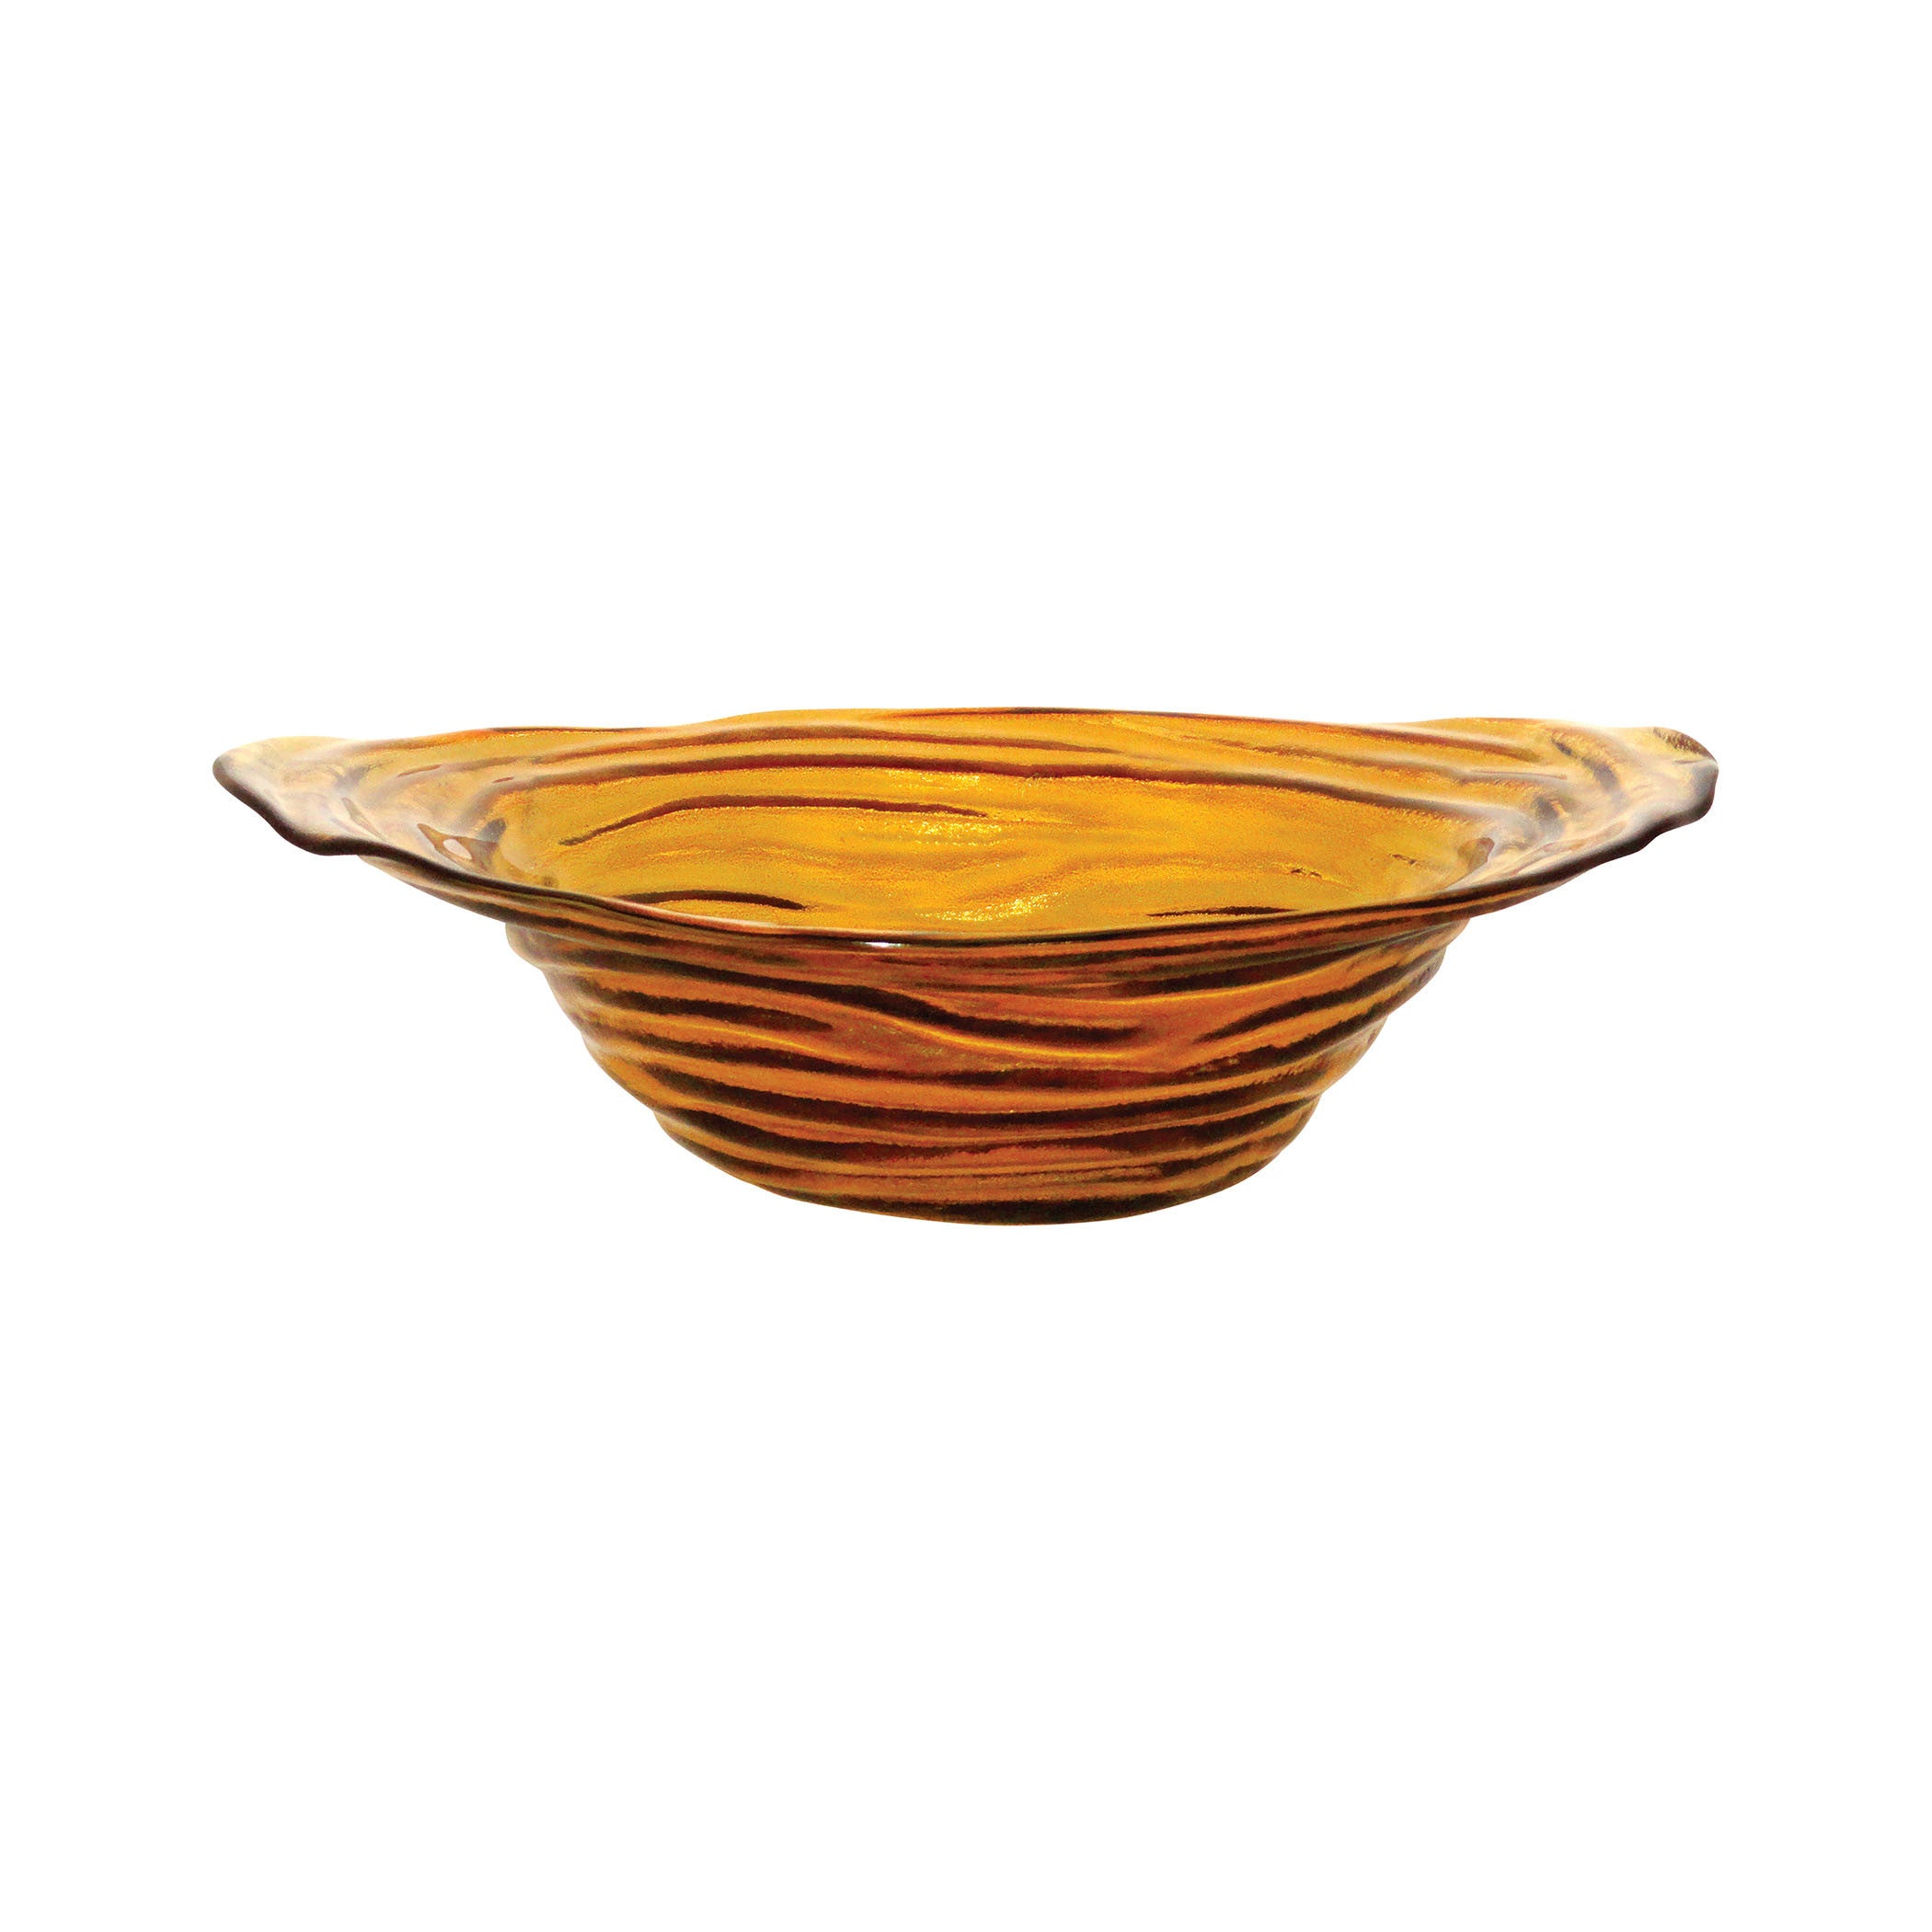 Pomeroy Pom-308444 Vortizan Collection Honey Finish Bowl